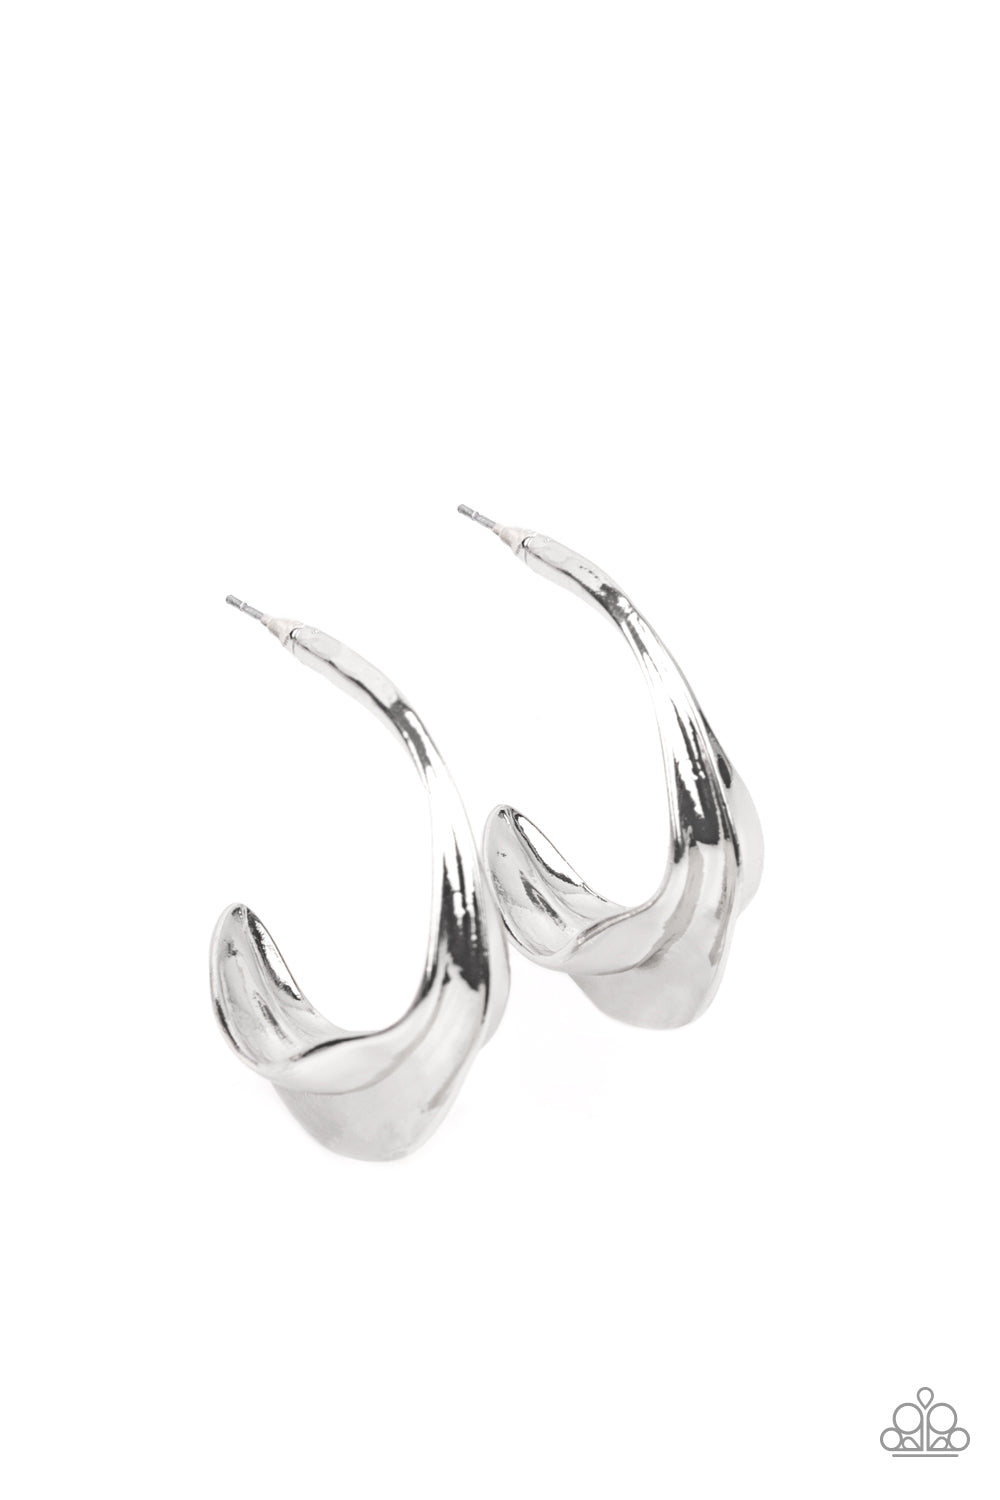 Modern Meltdown - Silver Hoop Earrings - Princess Glam Shop